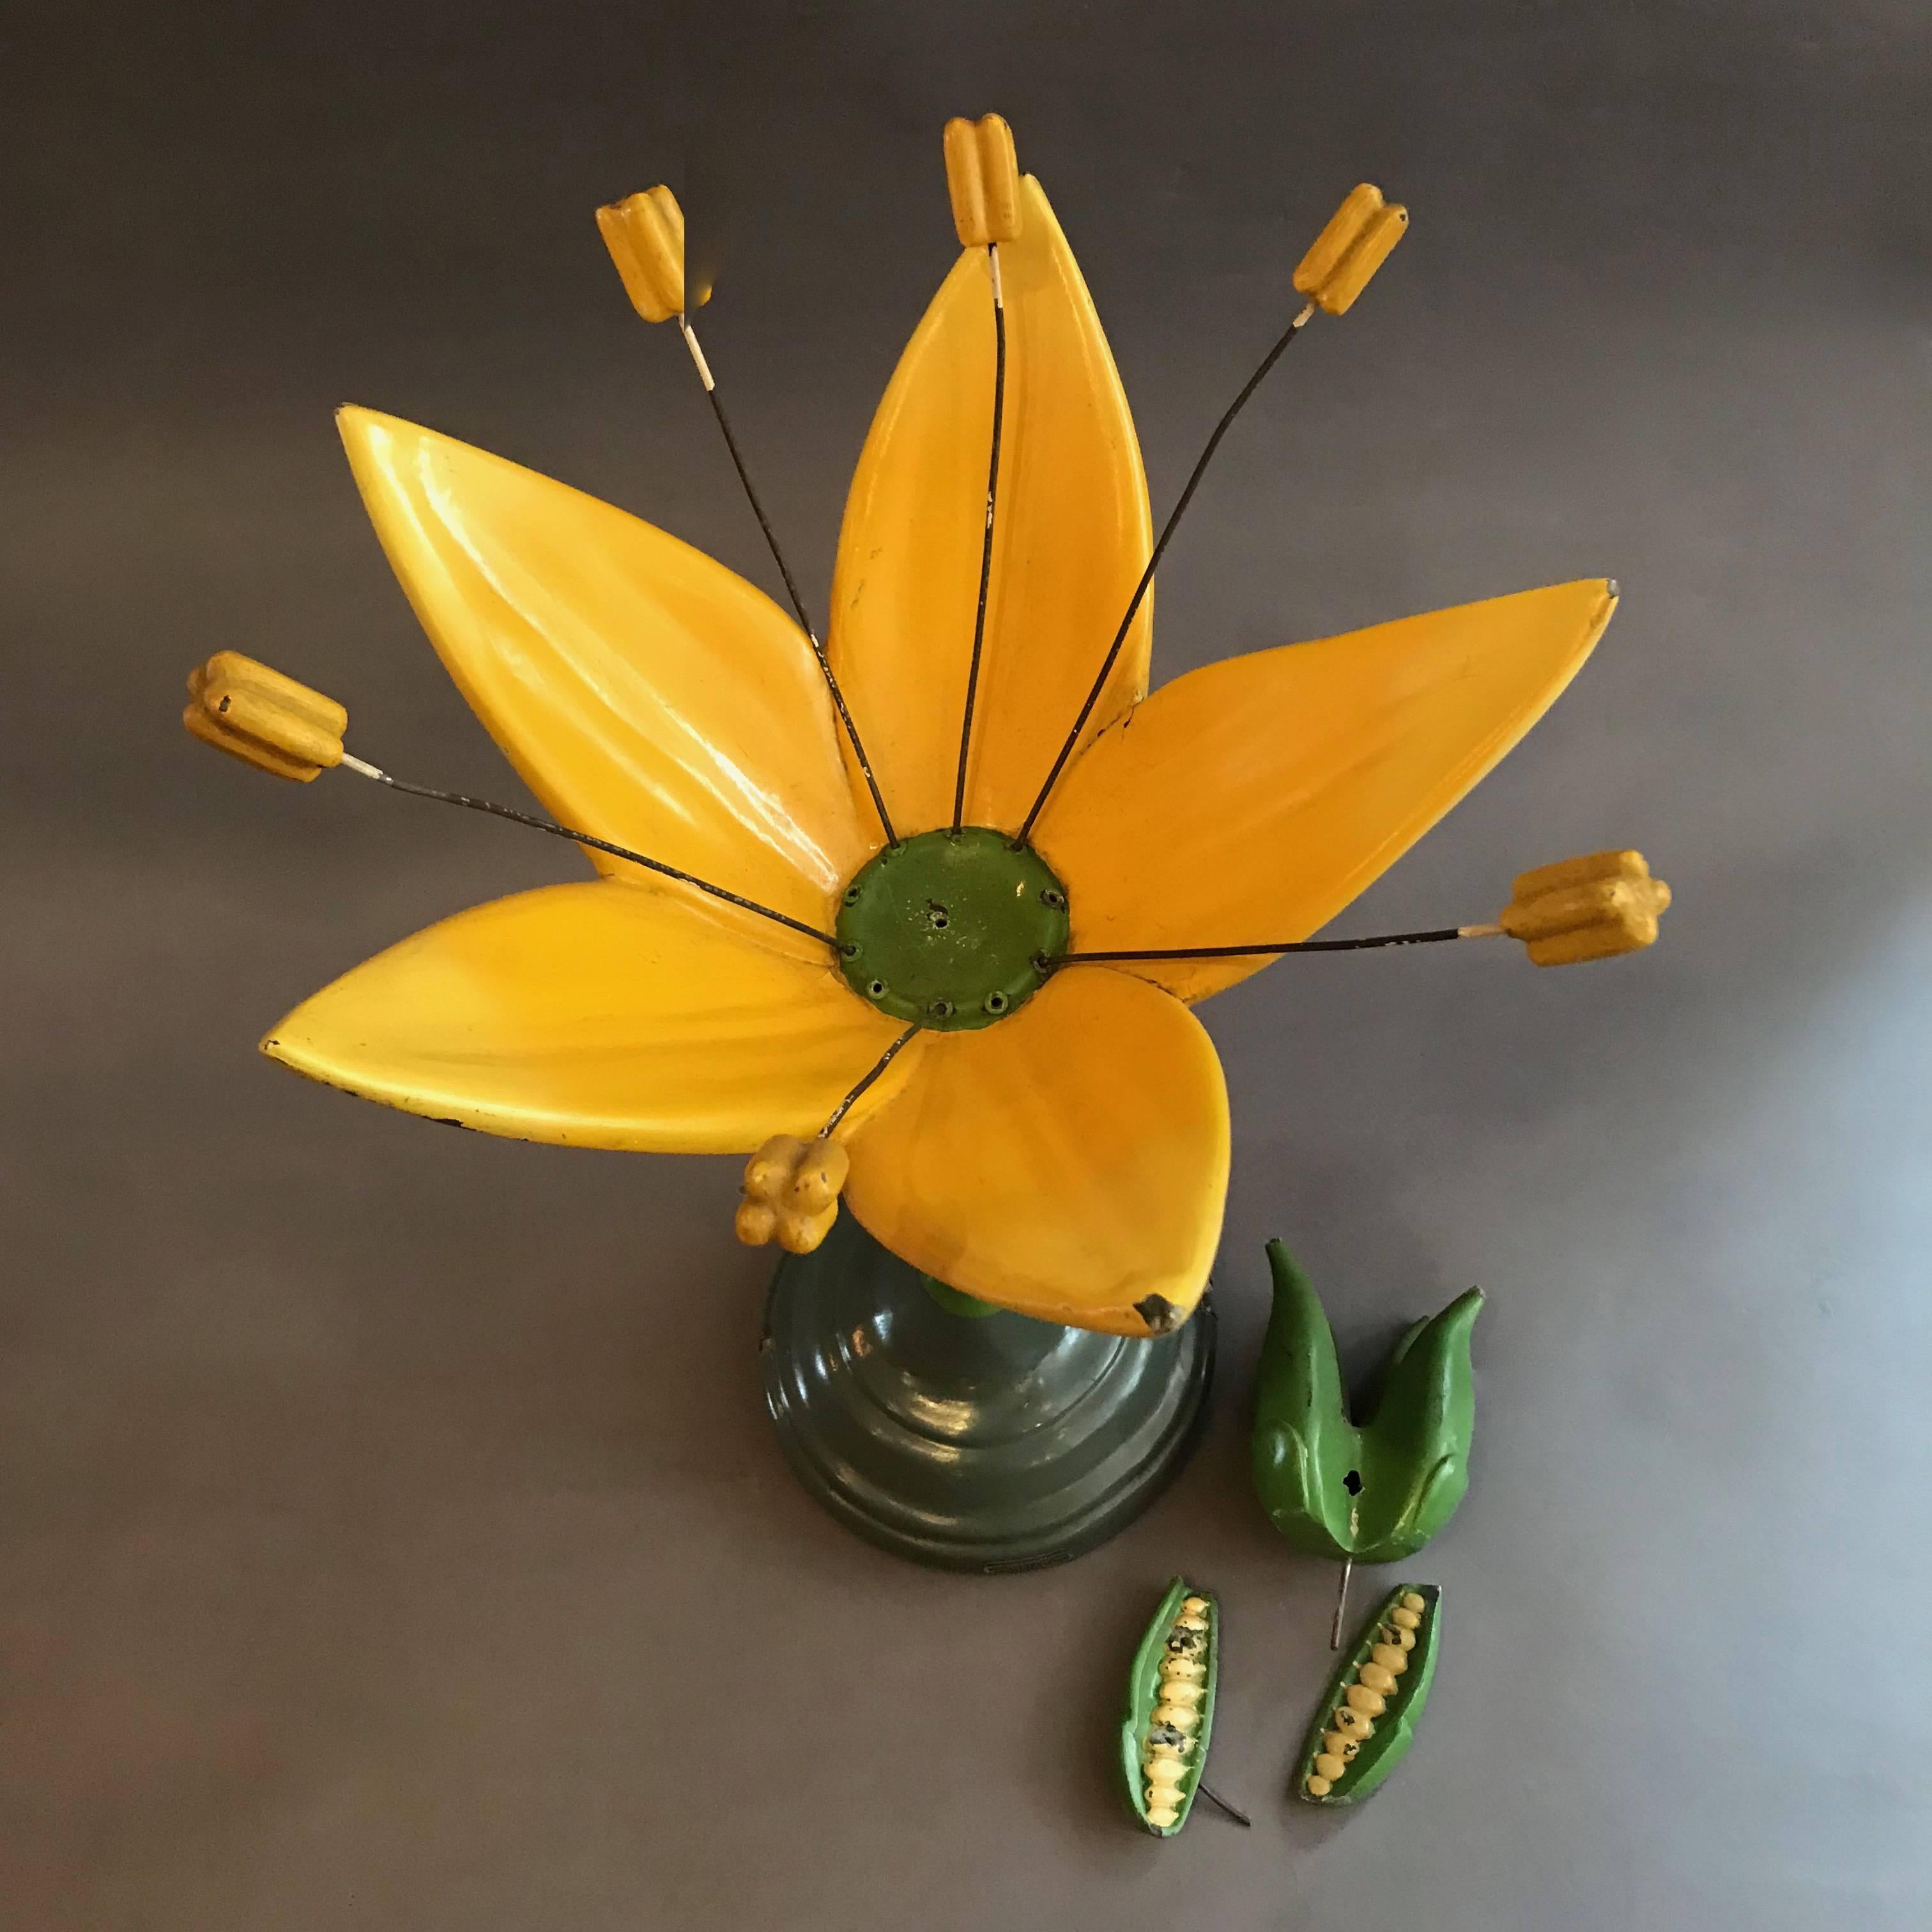 American Sargent-Welch Scientific Flower Botanical Model